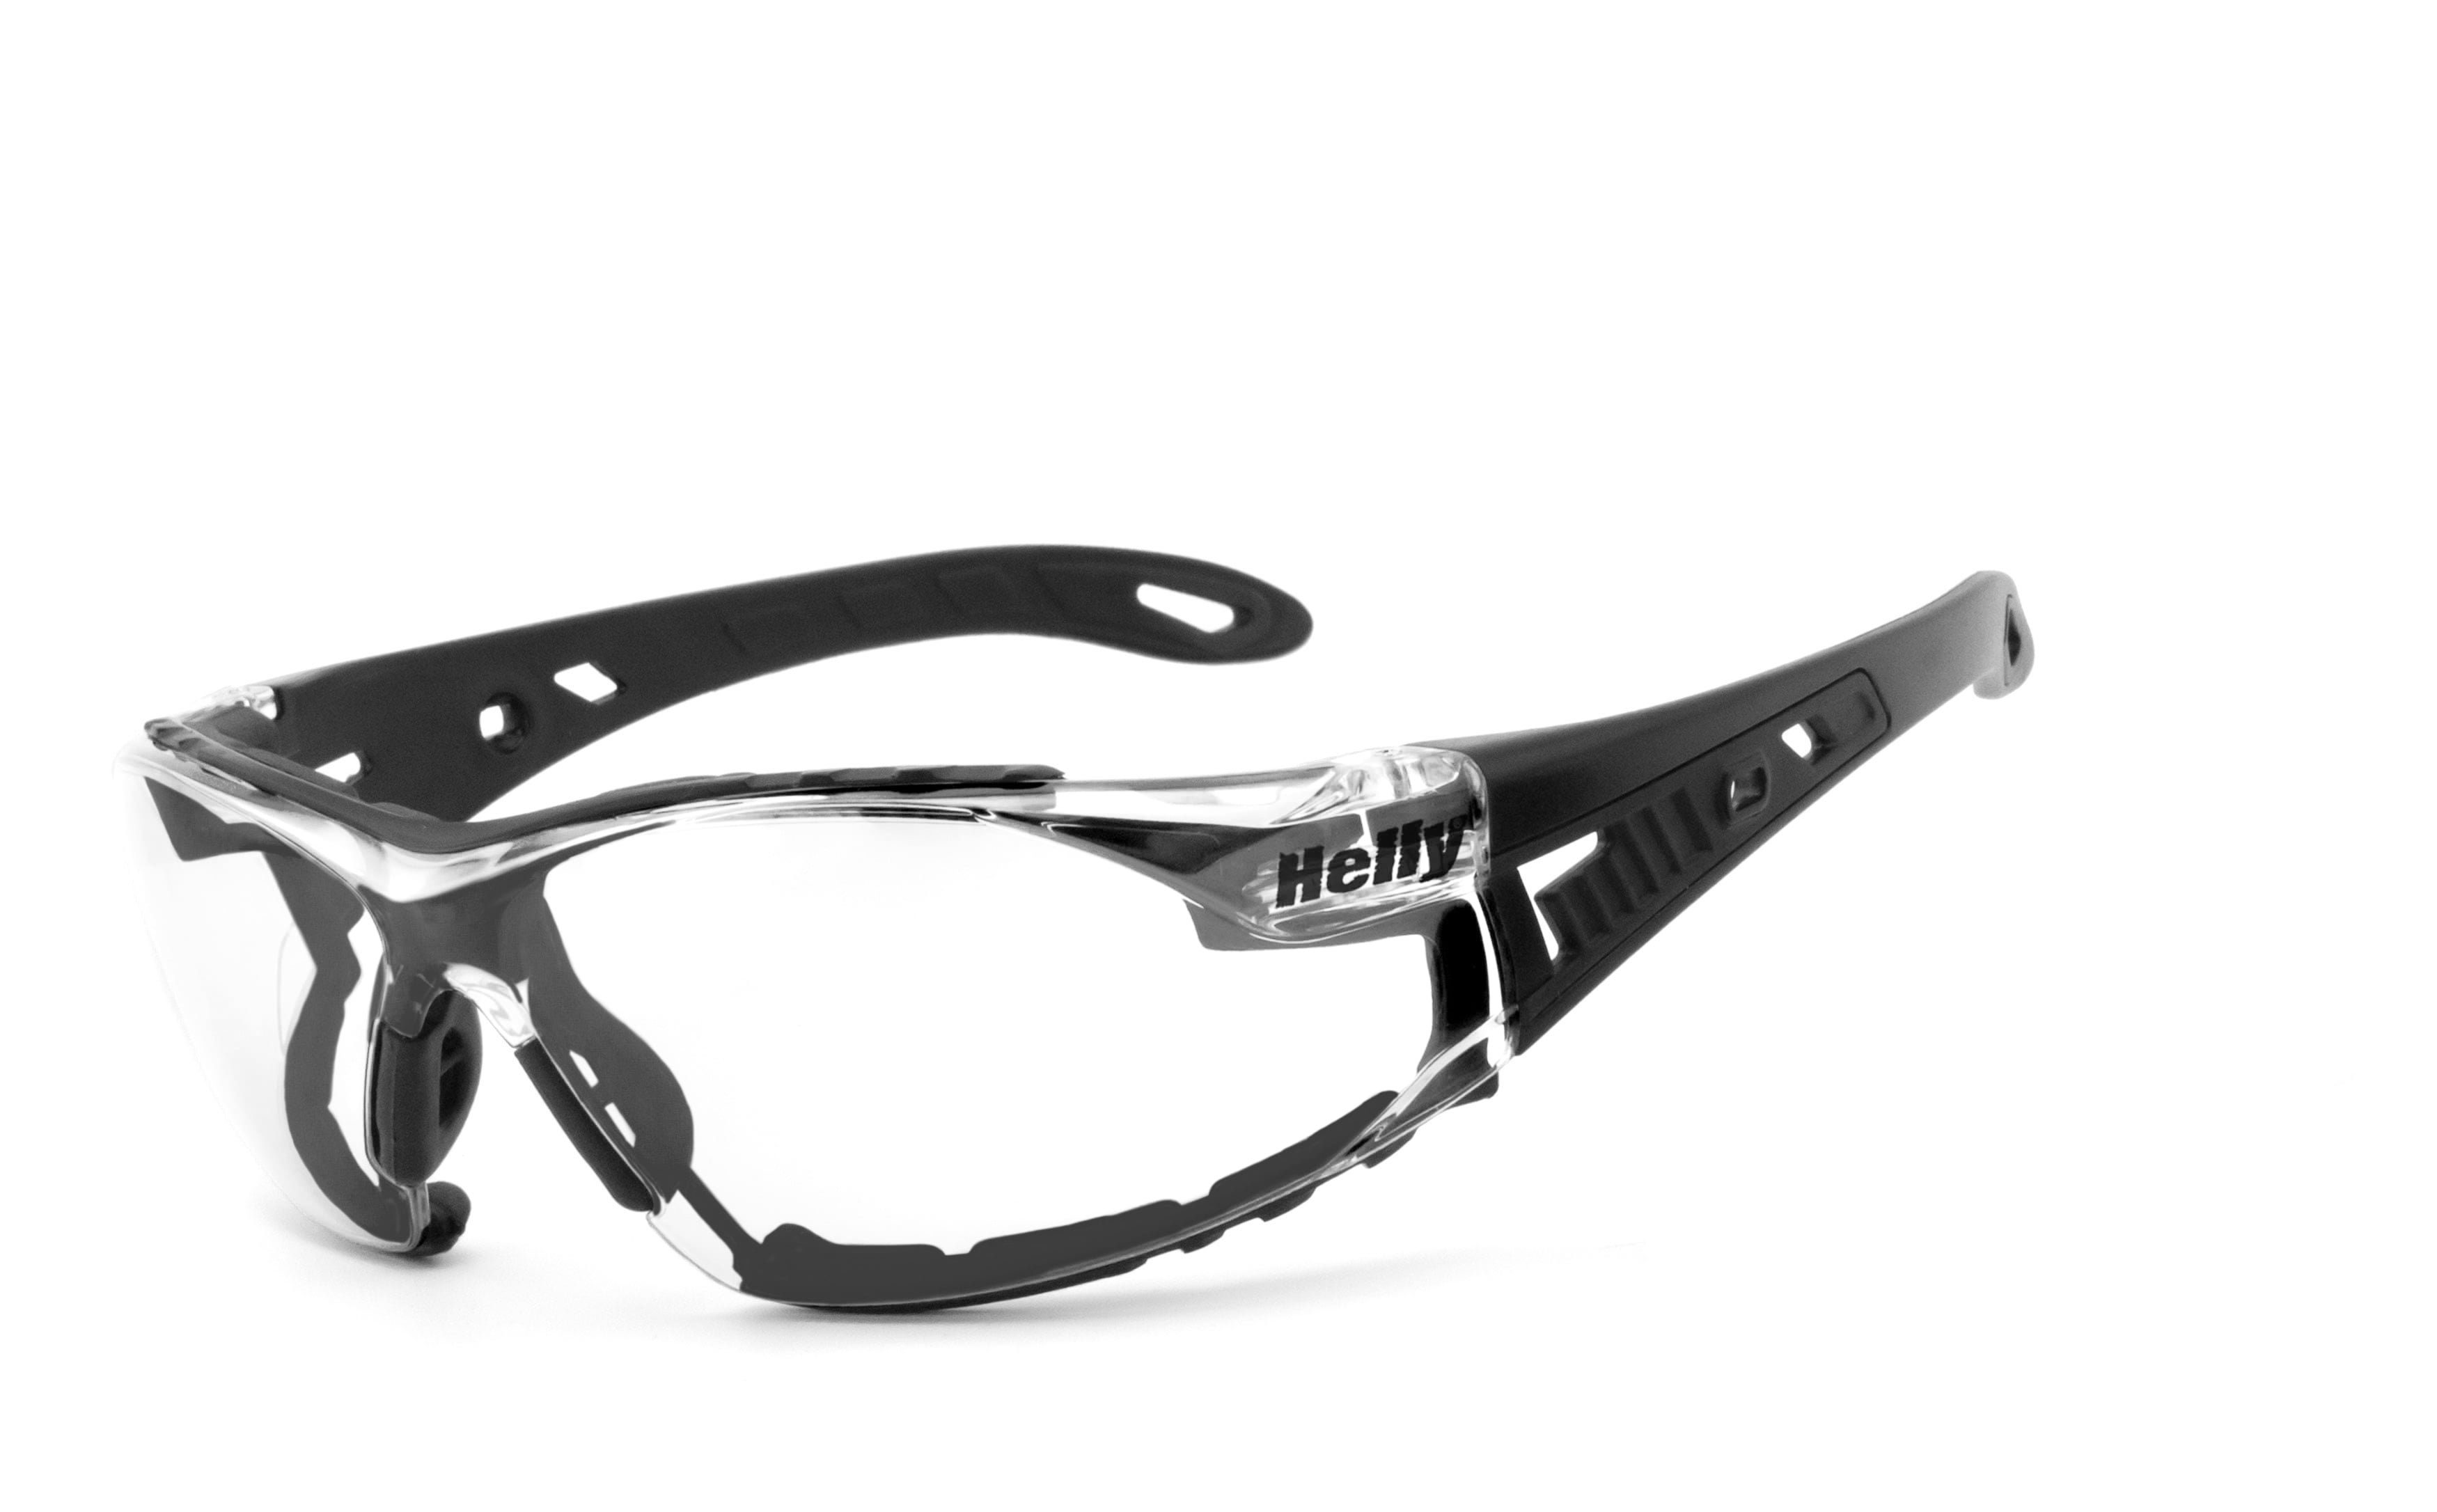 Helly - Bikereyes No.1 klar, super 5 flexible moab - Motorradbrille gepolstert, Brille